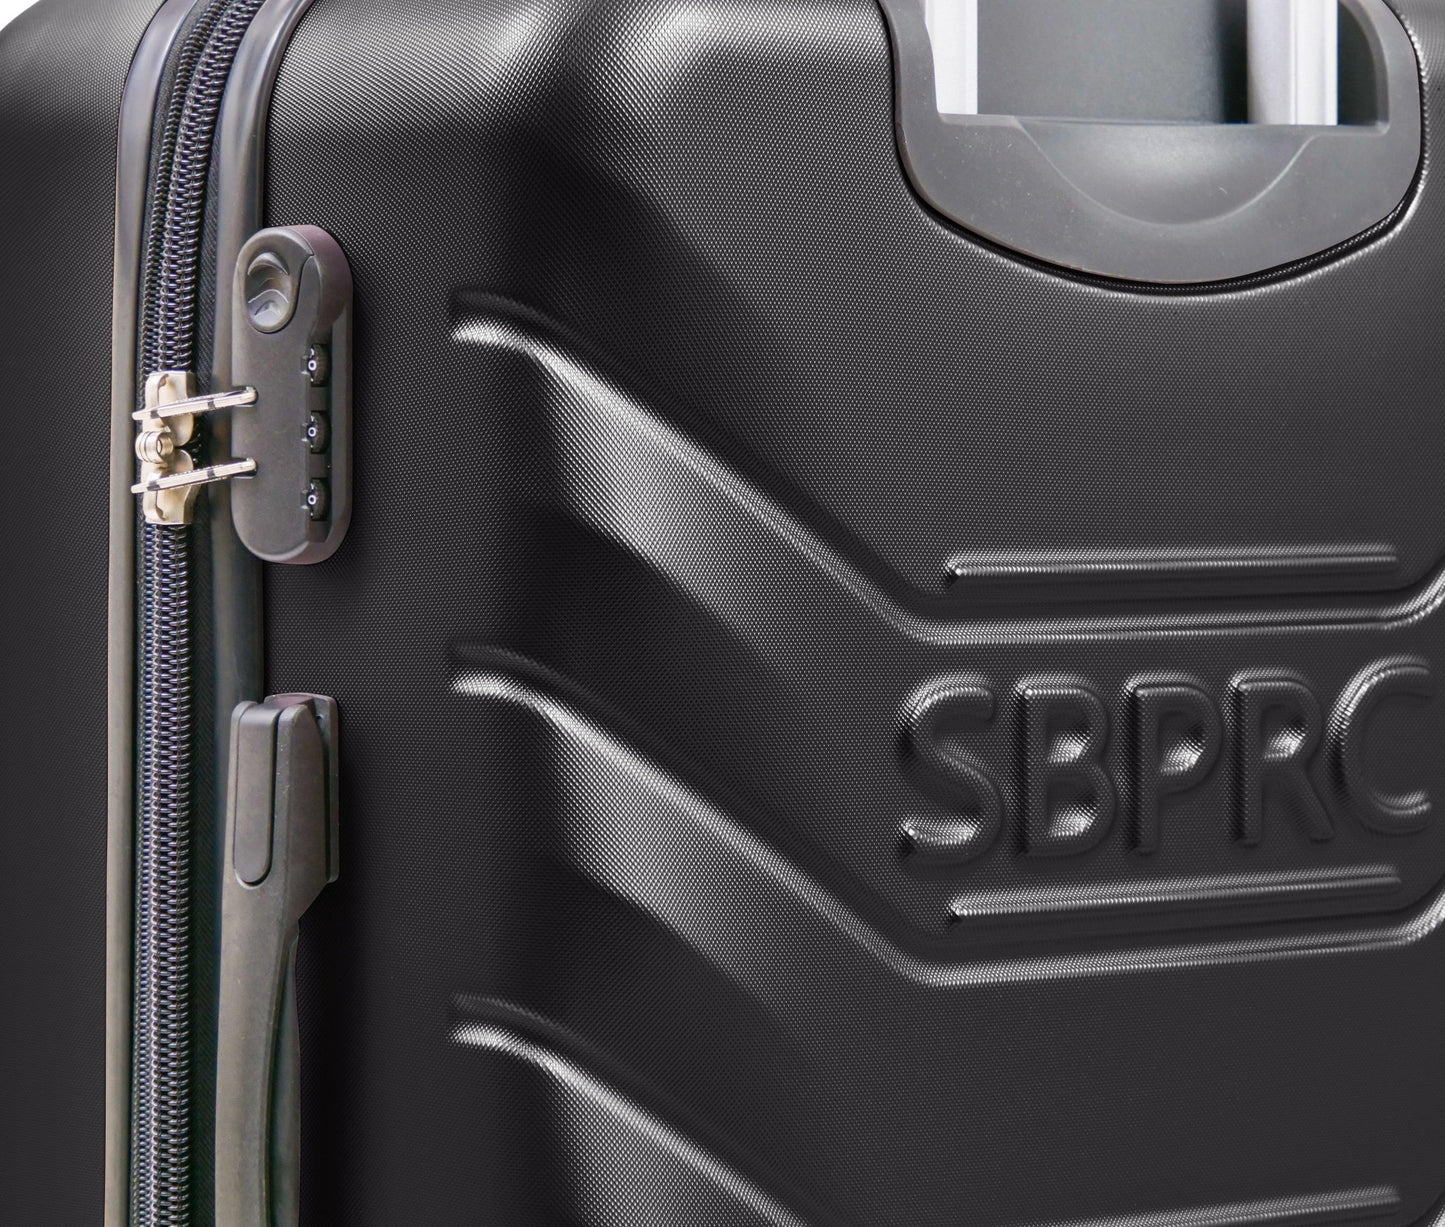 SANTA BARBARA POLO & RAQUET CLUB - מזוודה טרולי עלייה למטוס 20" דגם 1701 בצבע שחור - MASHBIR//365